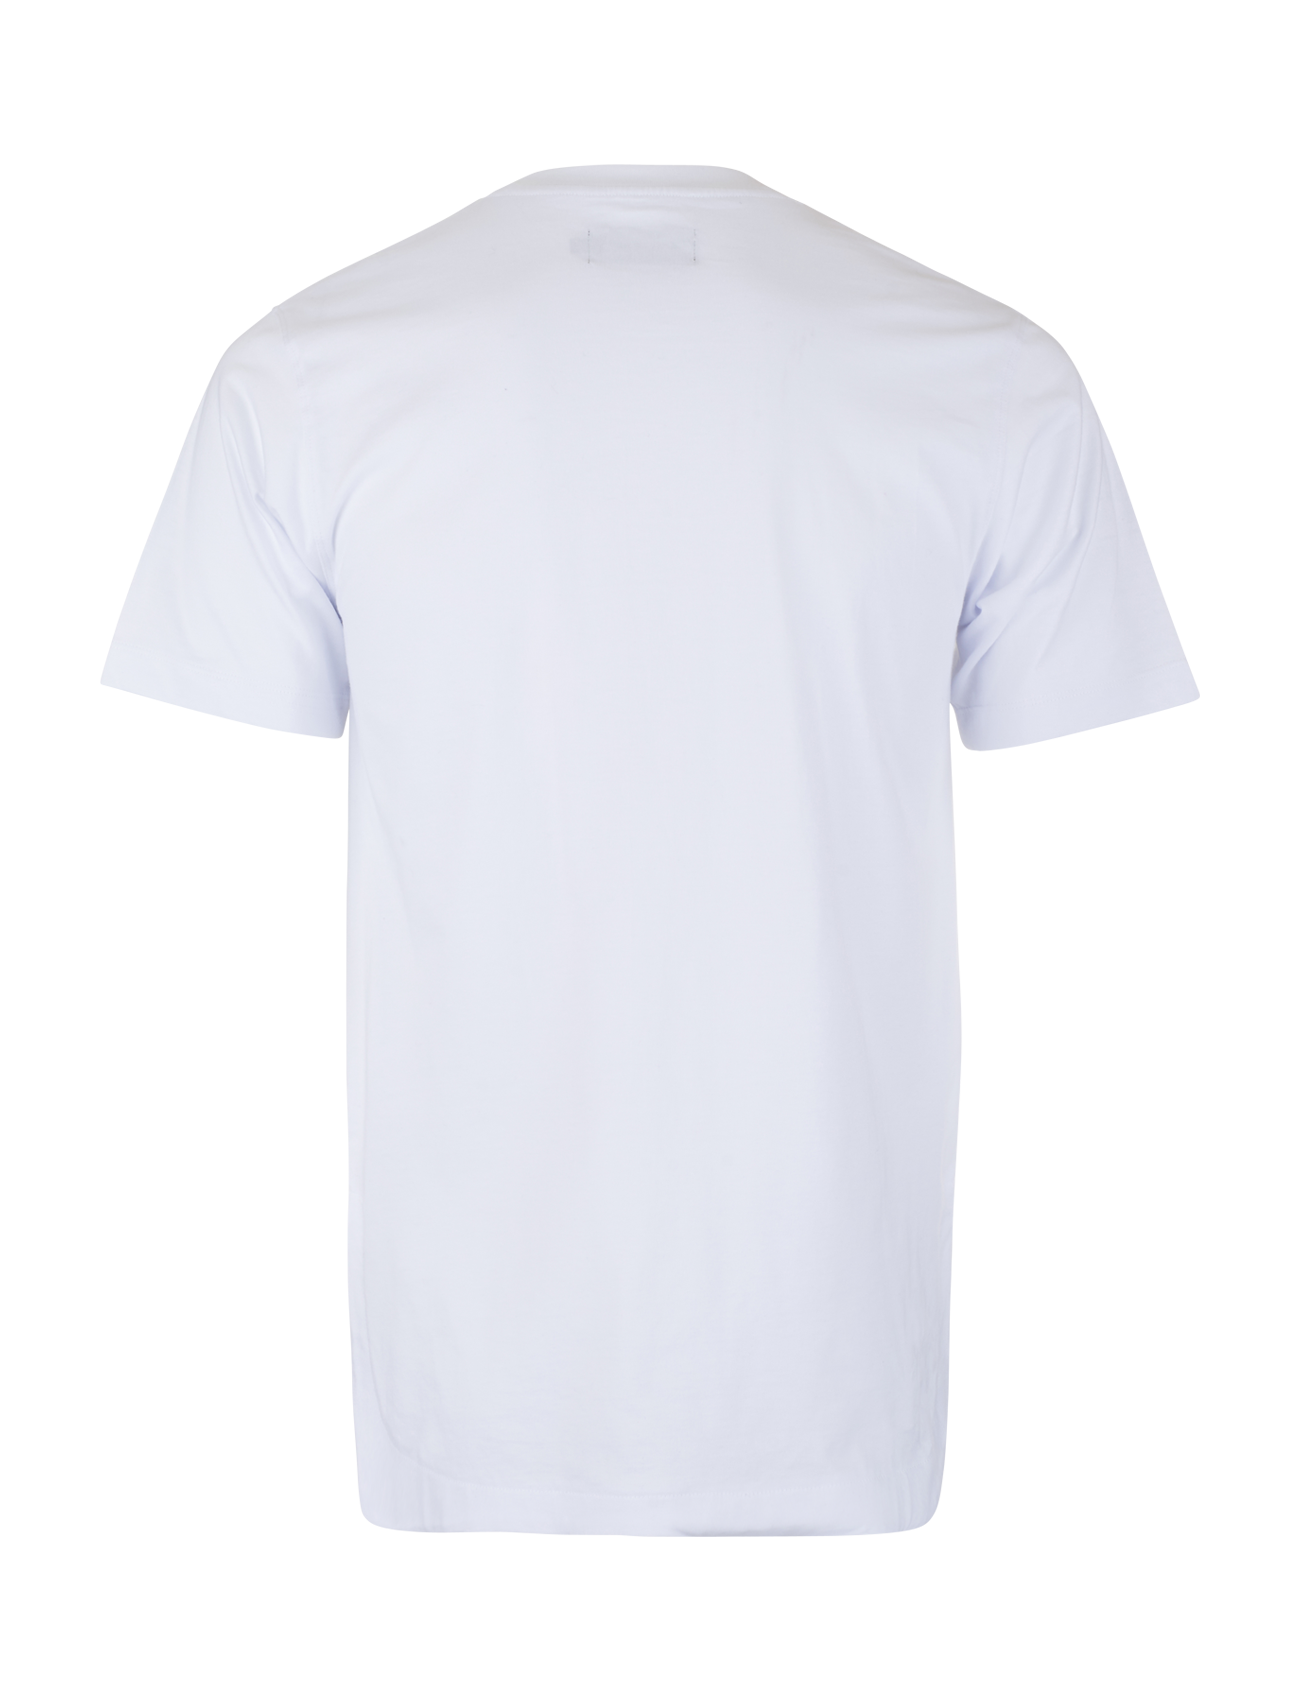 Download 6637+ Transparent White T Shirt Mockup Png Download Free ...